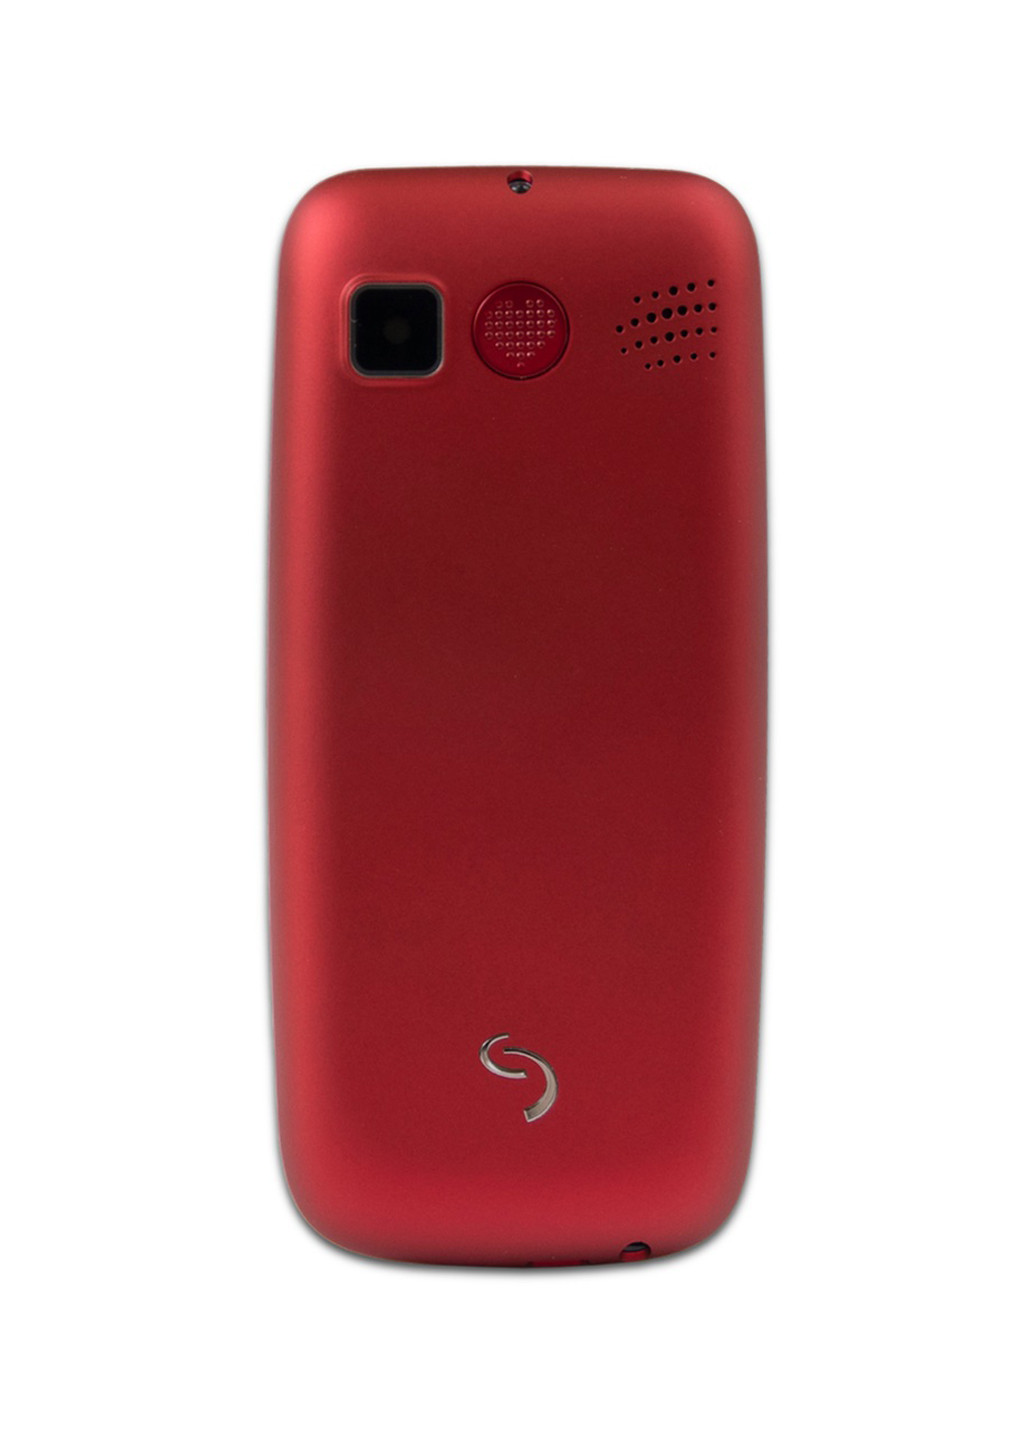 Мобільний телефон Sigma mobile comfort 50 elegance3 red (4827798233795) (130940049)